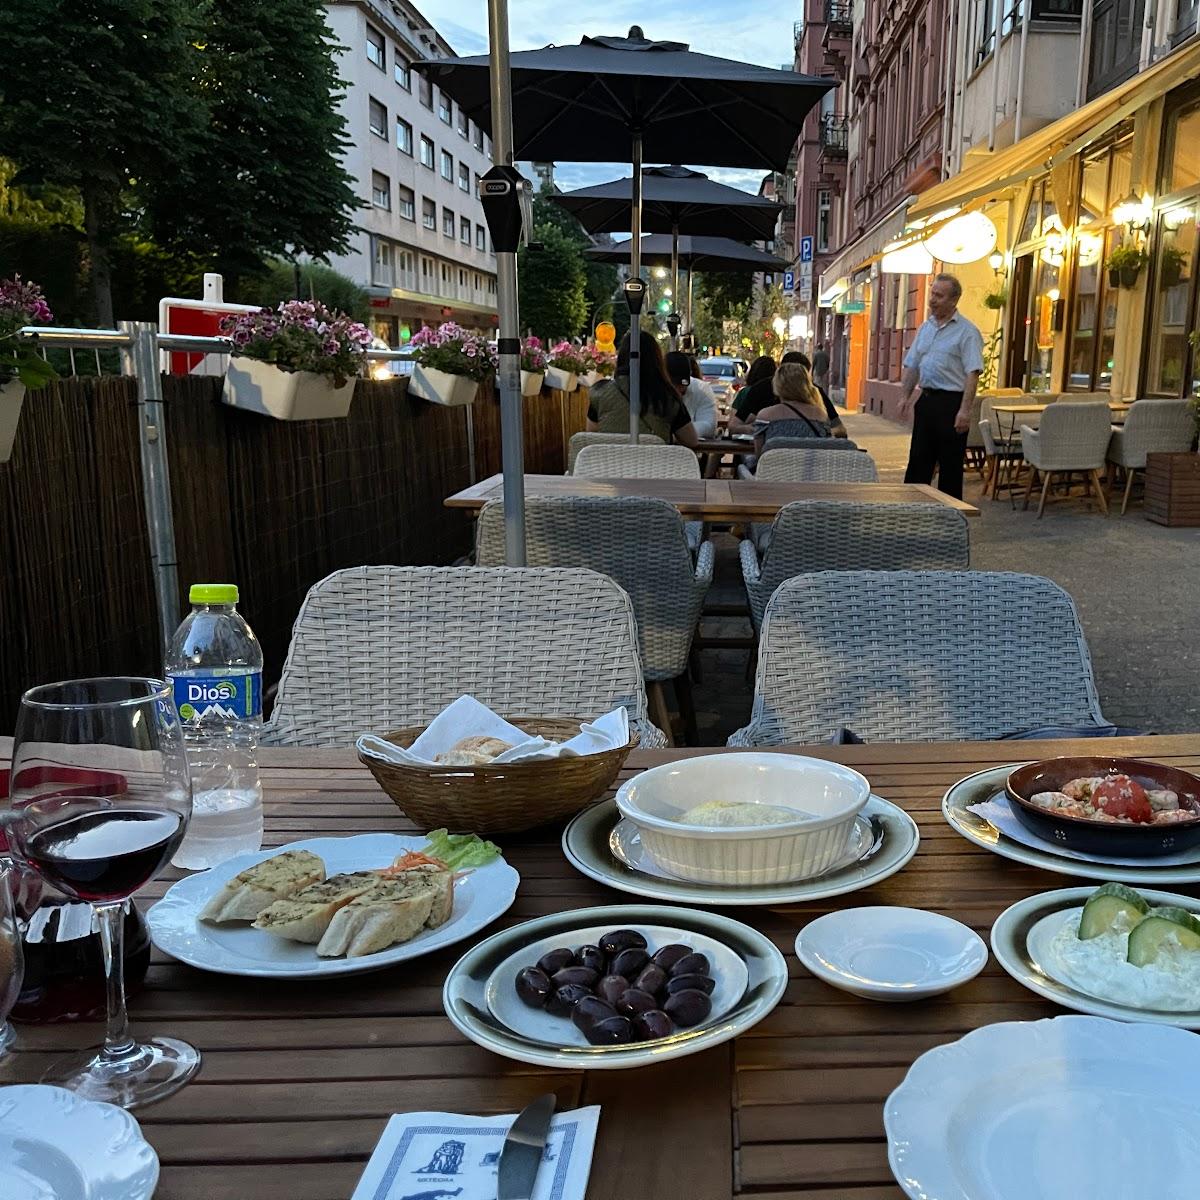 Restaurant "Poseidon" in Heidelberg